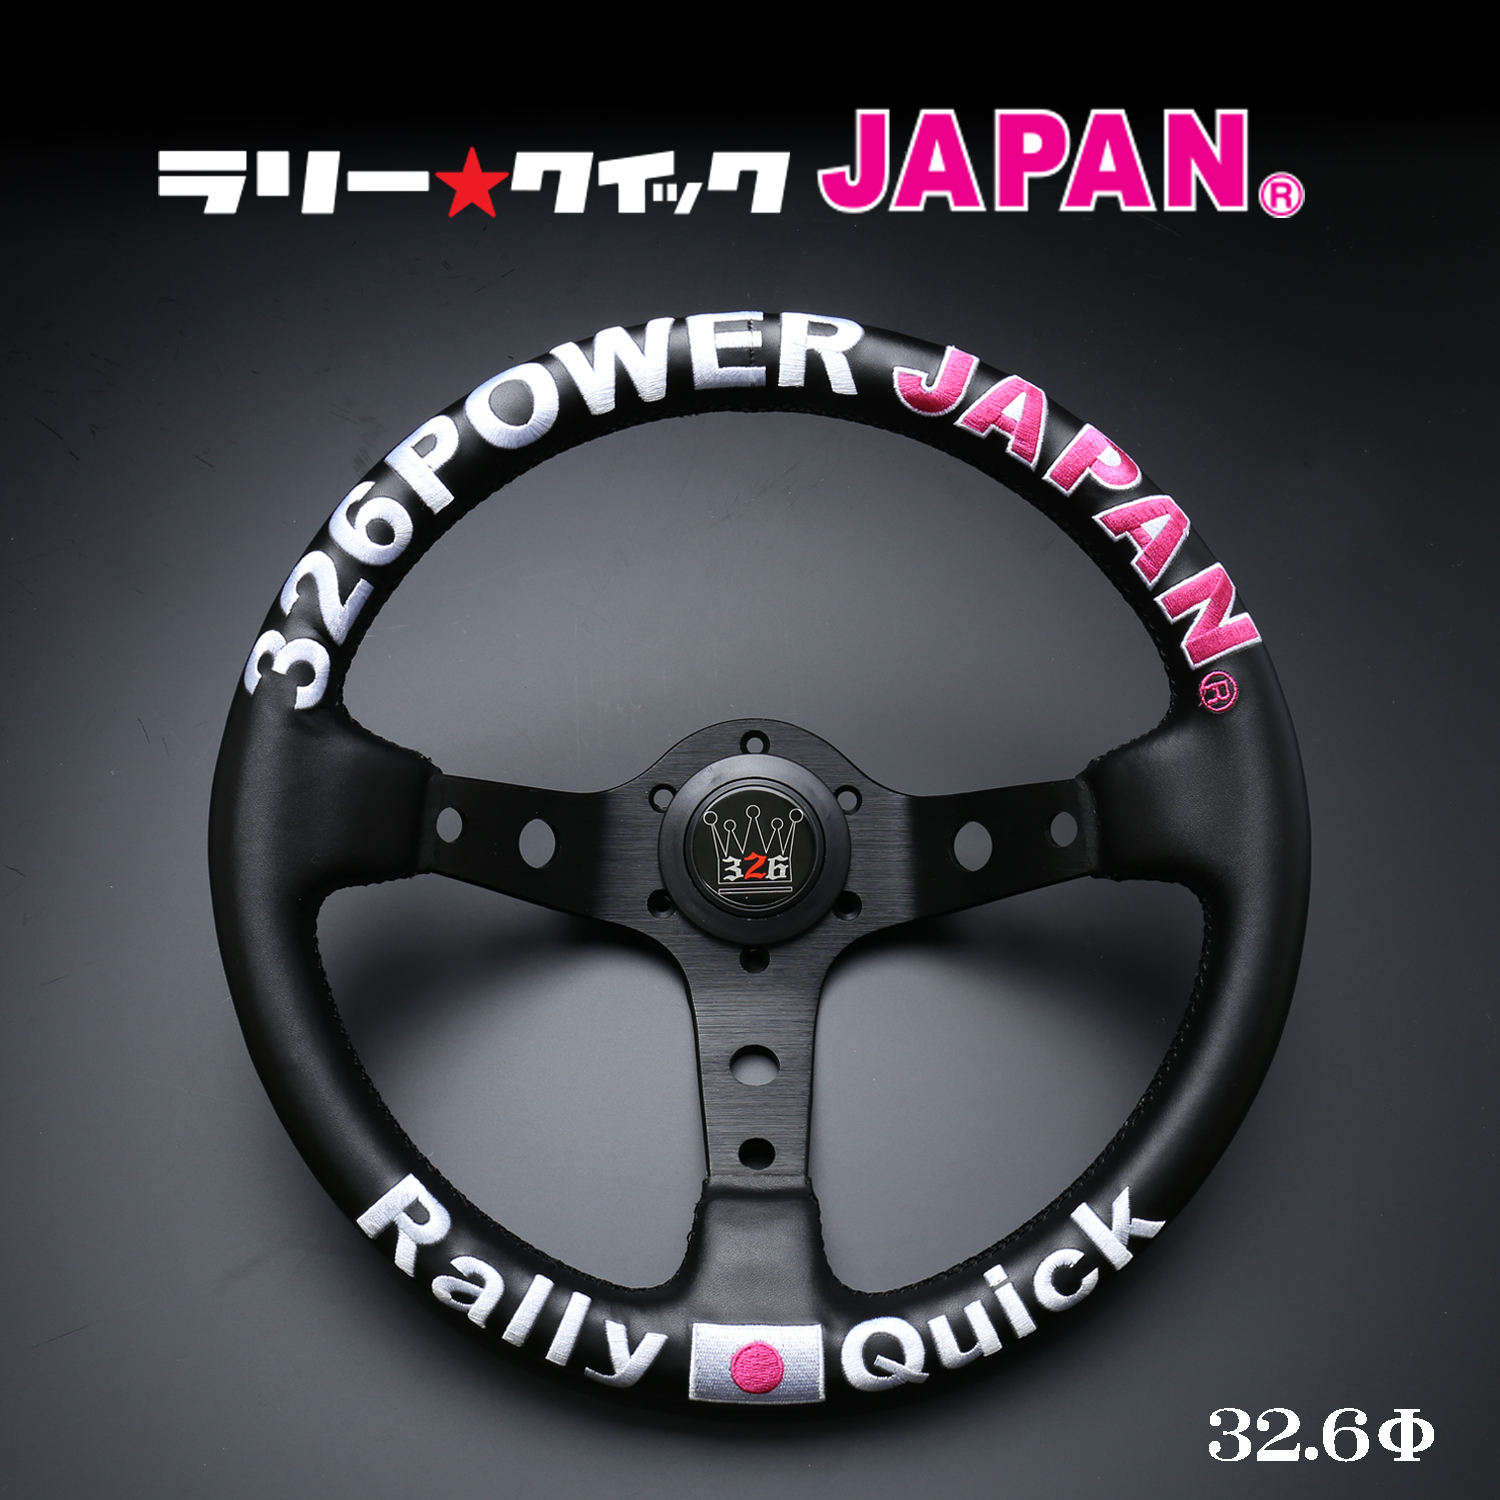 Купить японский руль. 326 Power Japan руль. 326 Power Steering Wheel. Спортивный руль. Японские спортивные рули.